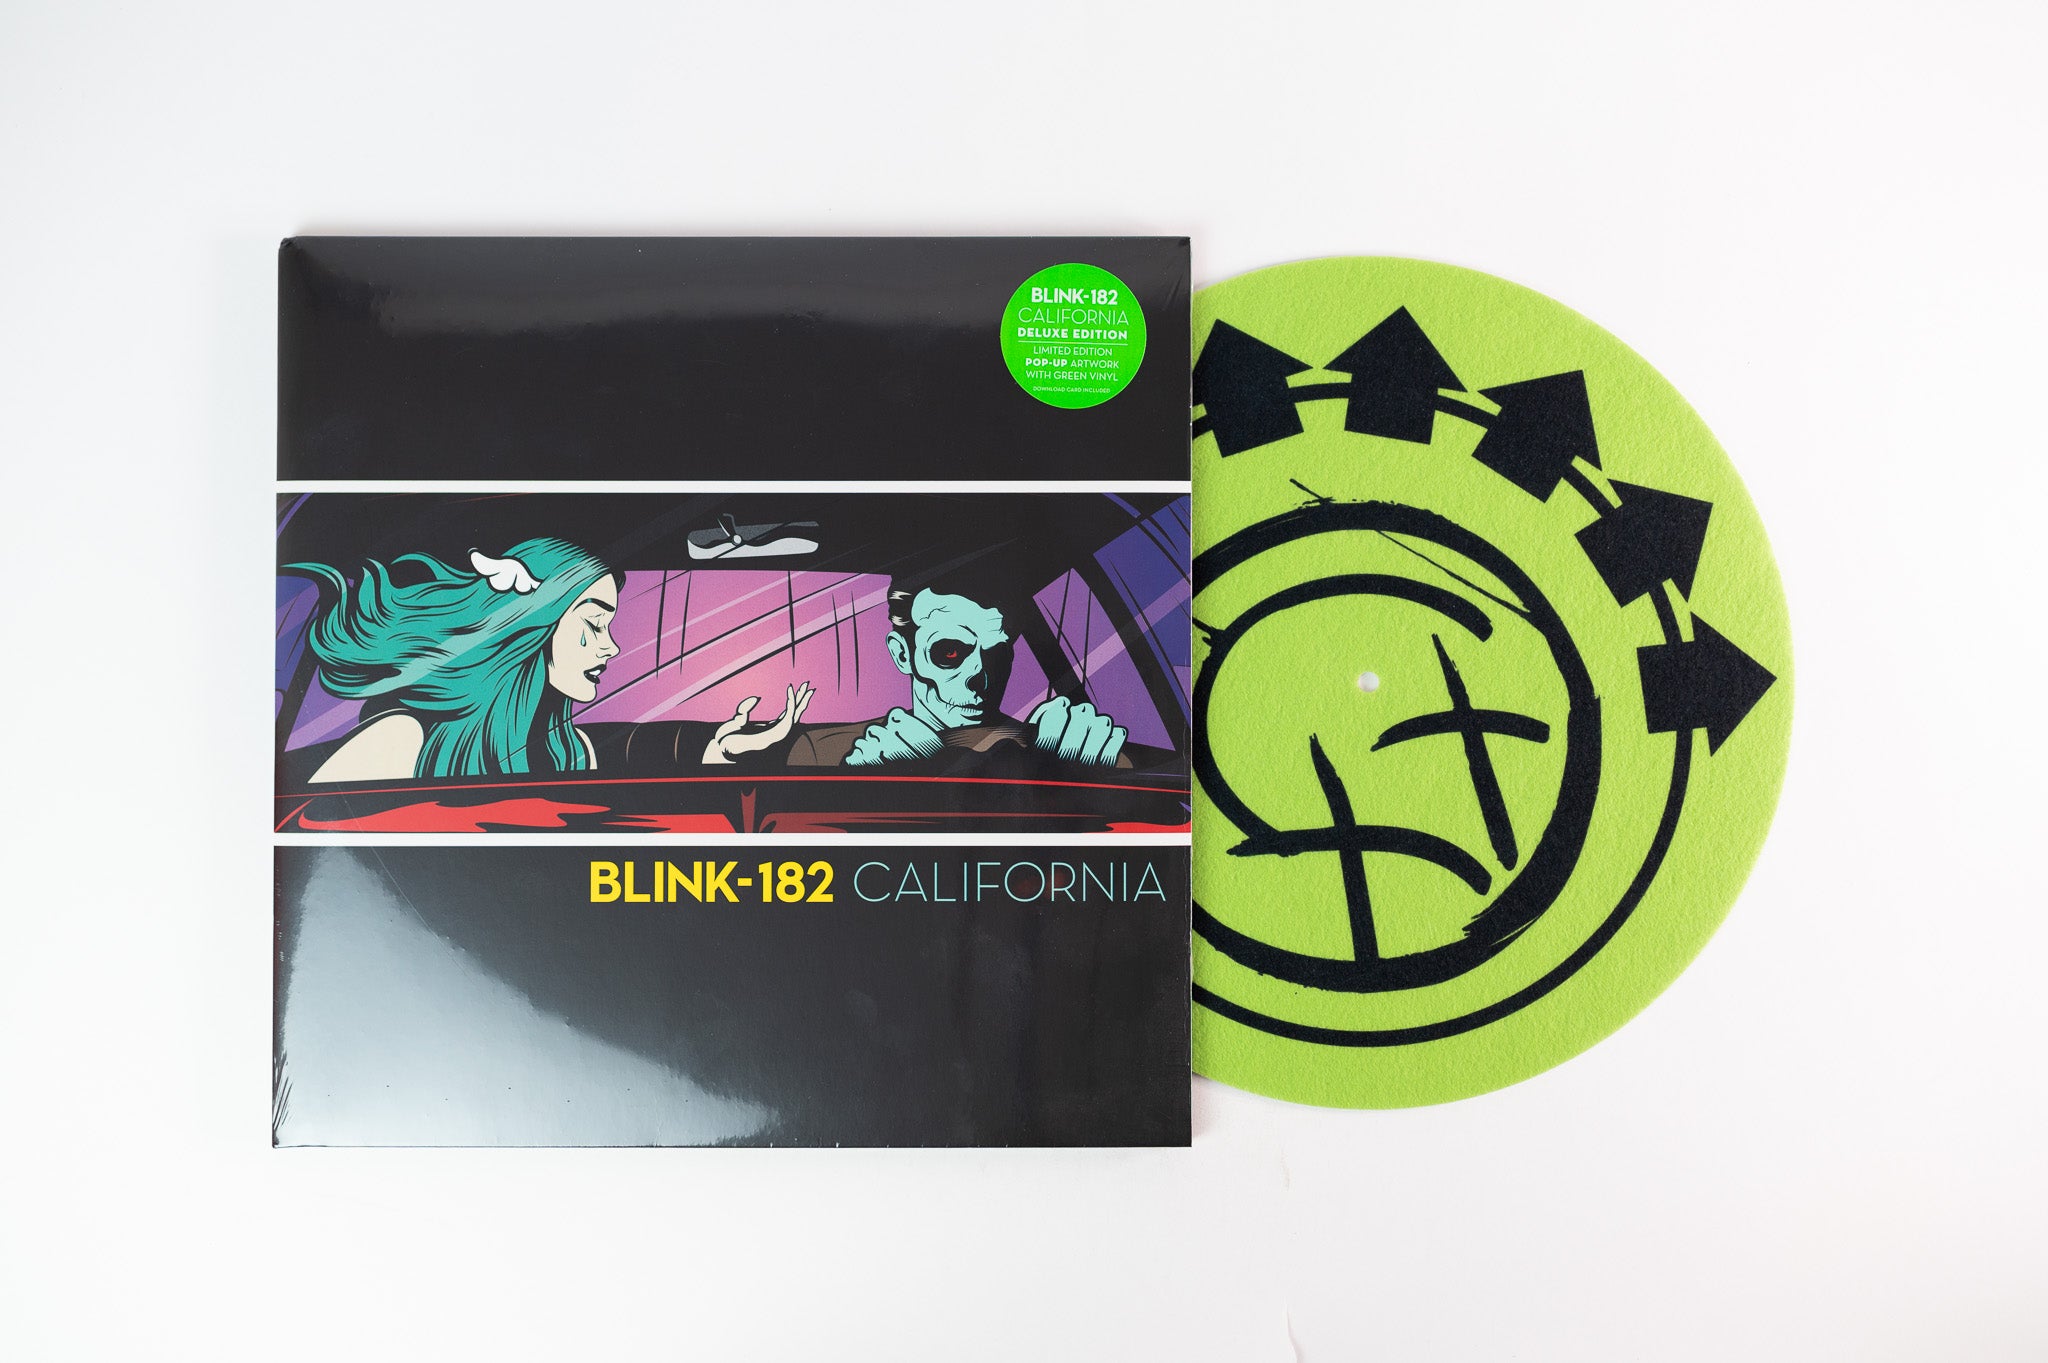 Blink-182 - California on BMG Ltd Edition Green Vinyl with Slip Mat Sealed